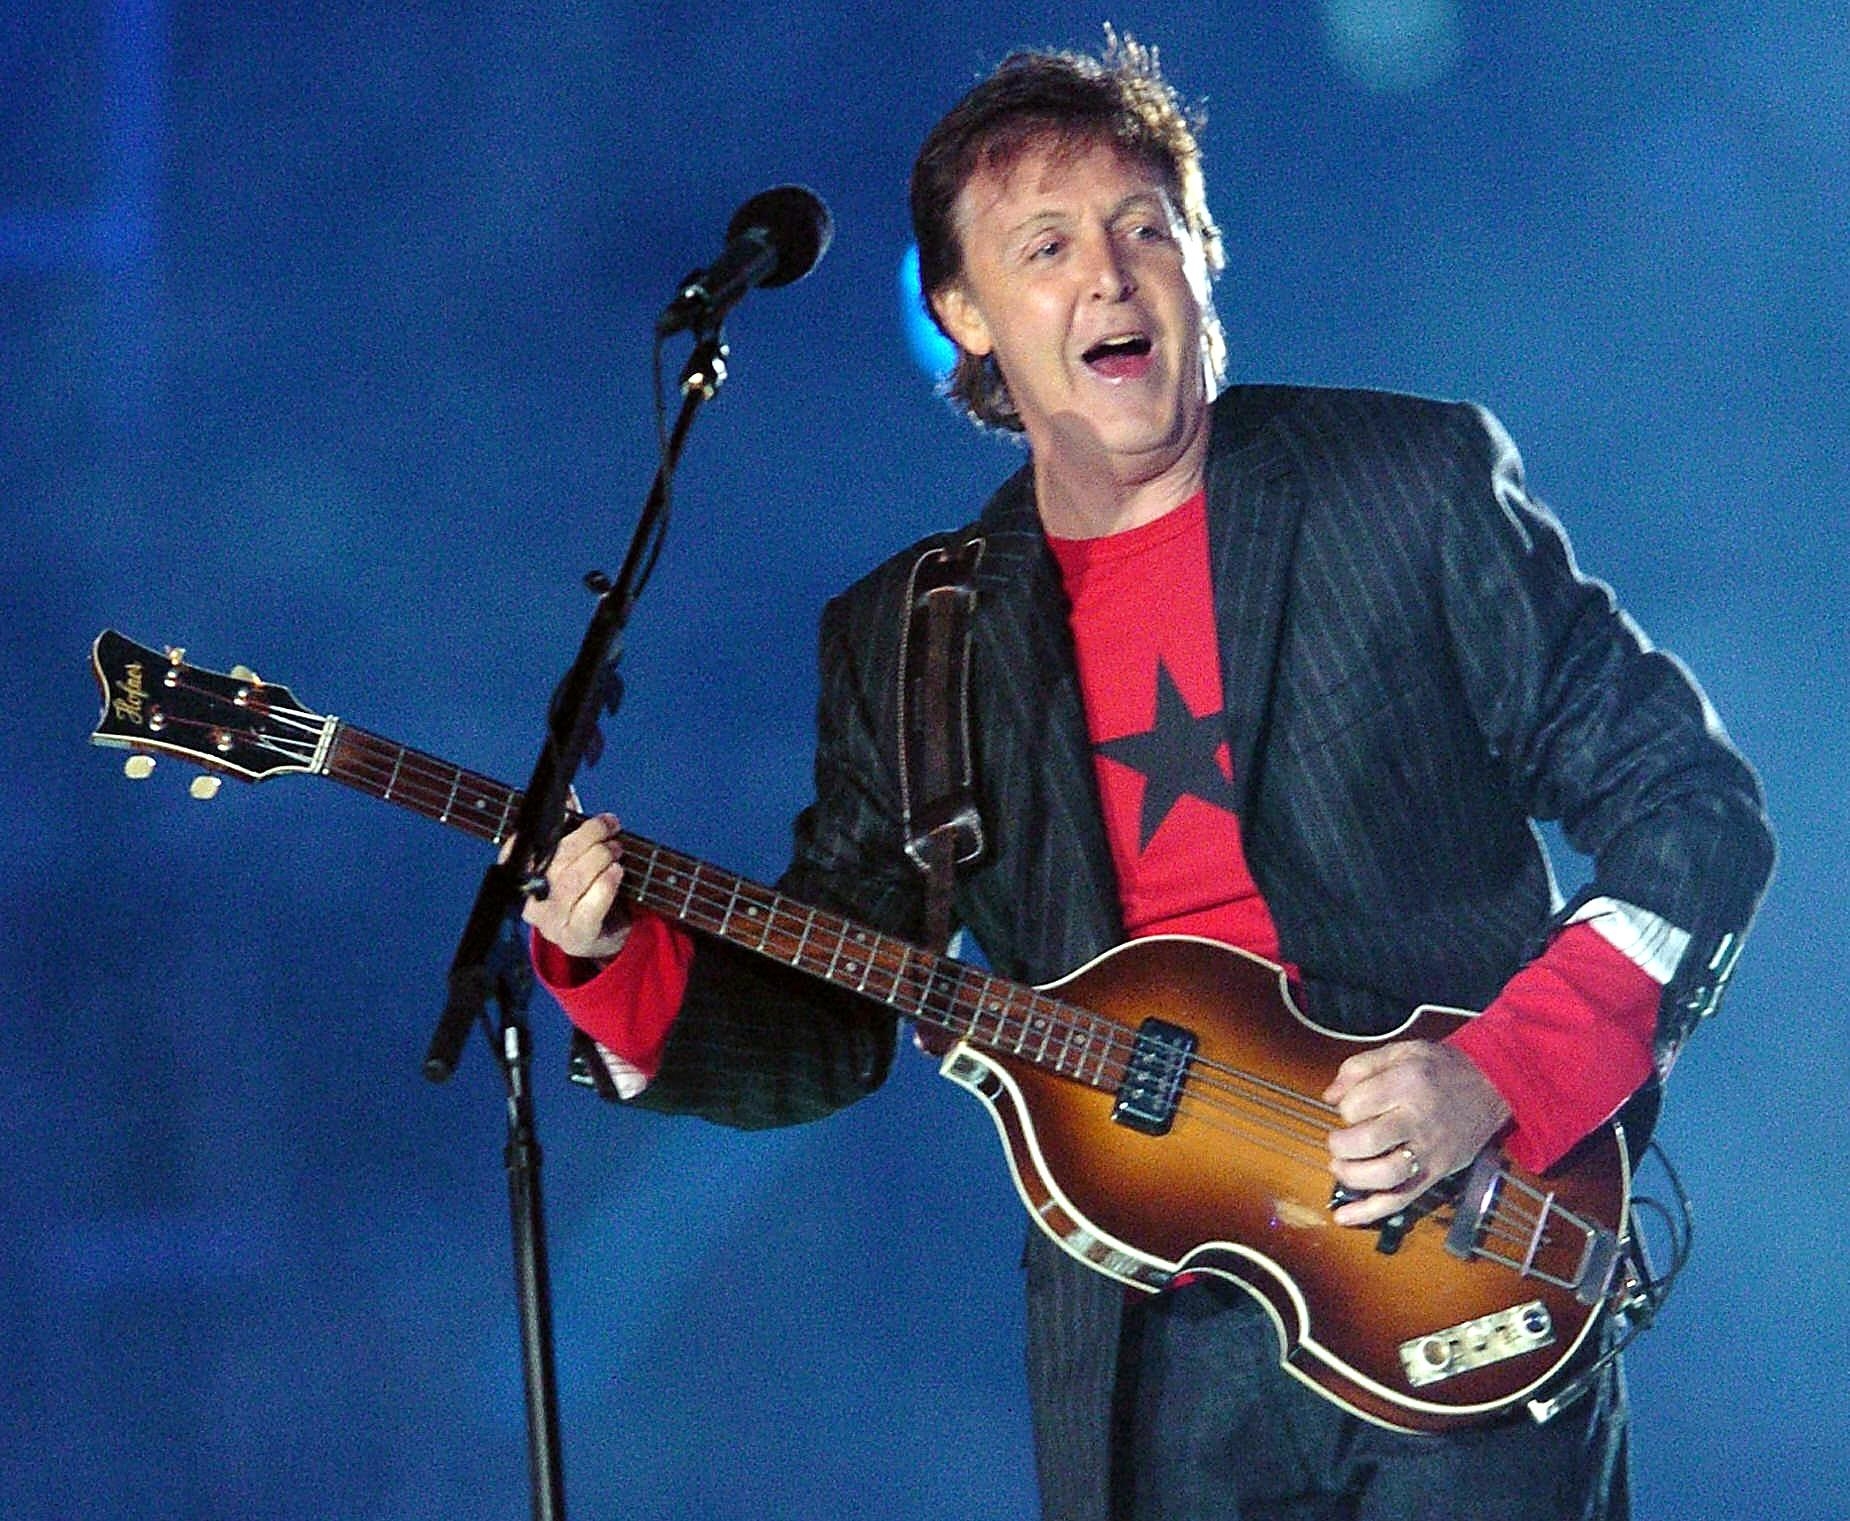 British rock legend Paul McCartney performs at halftime of Super Bowl XXXIX